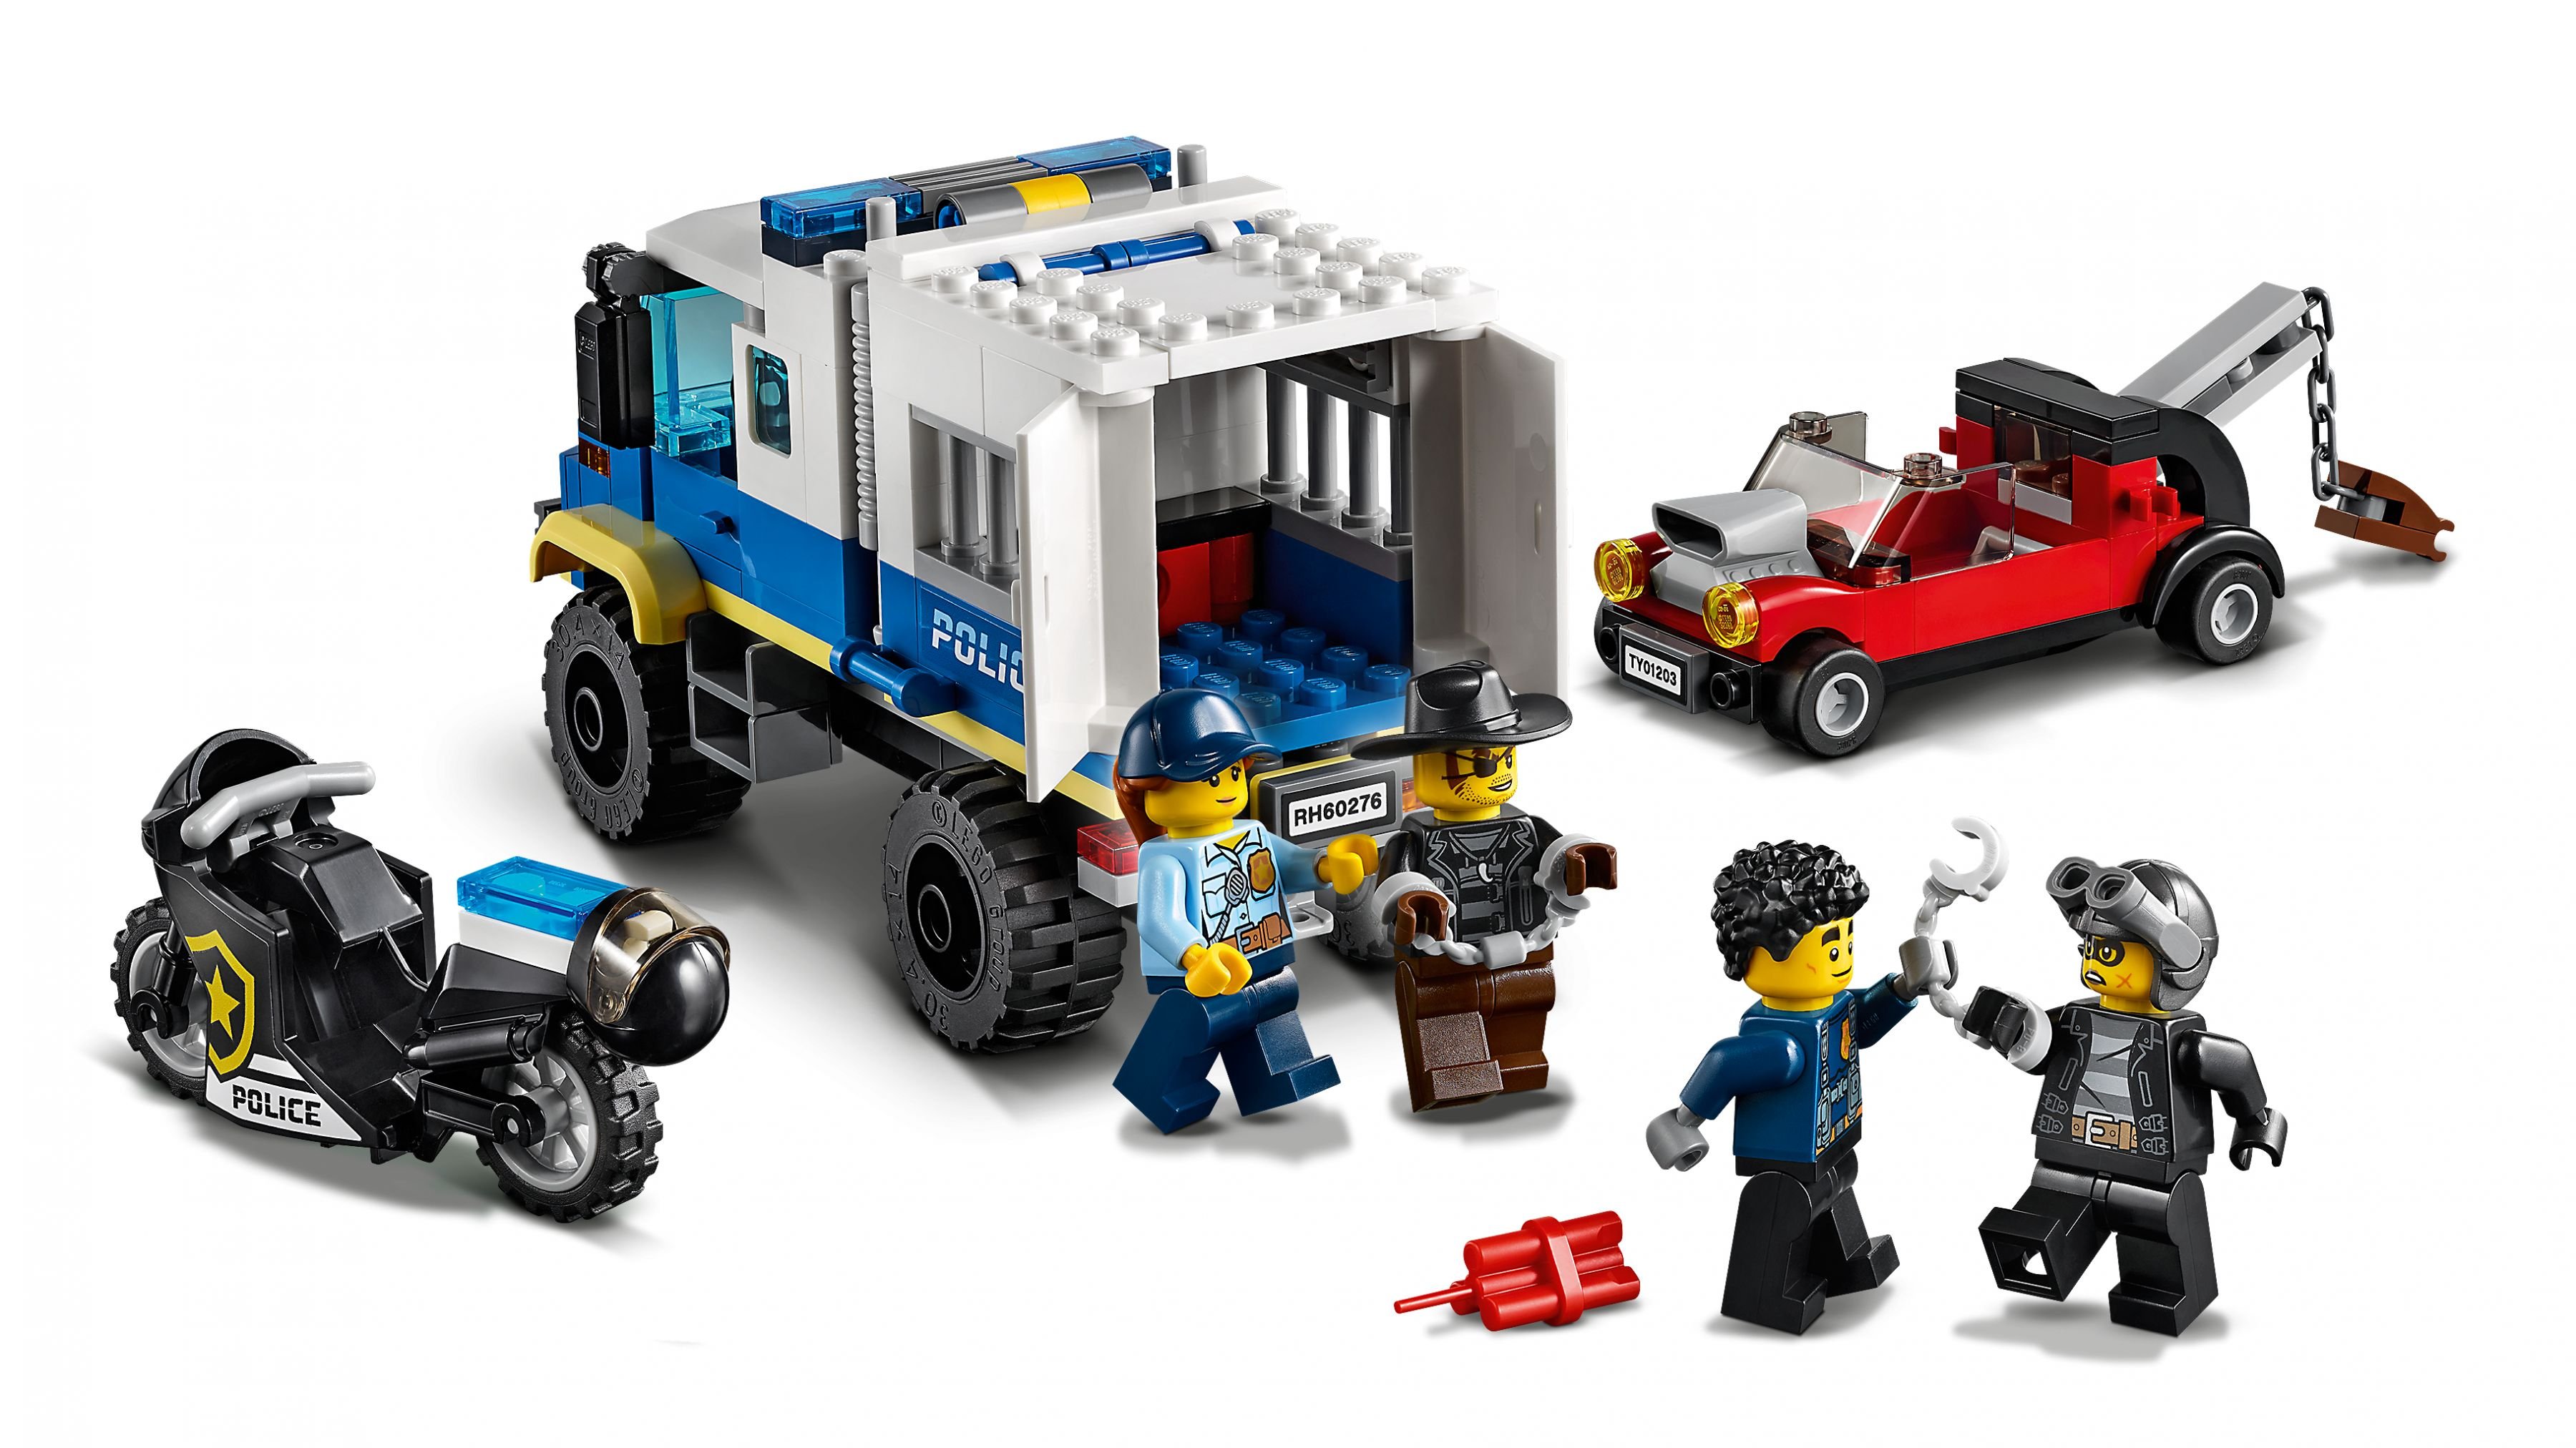 LEGO City 60276 Polizei Gefangenentransporter LEGO_60276_alt5.jpg